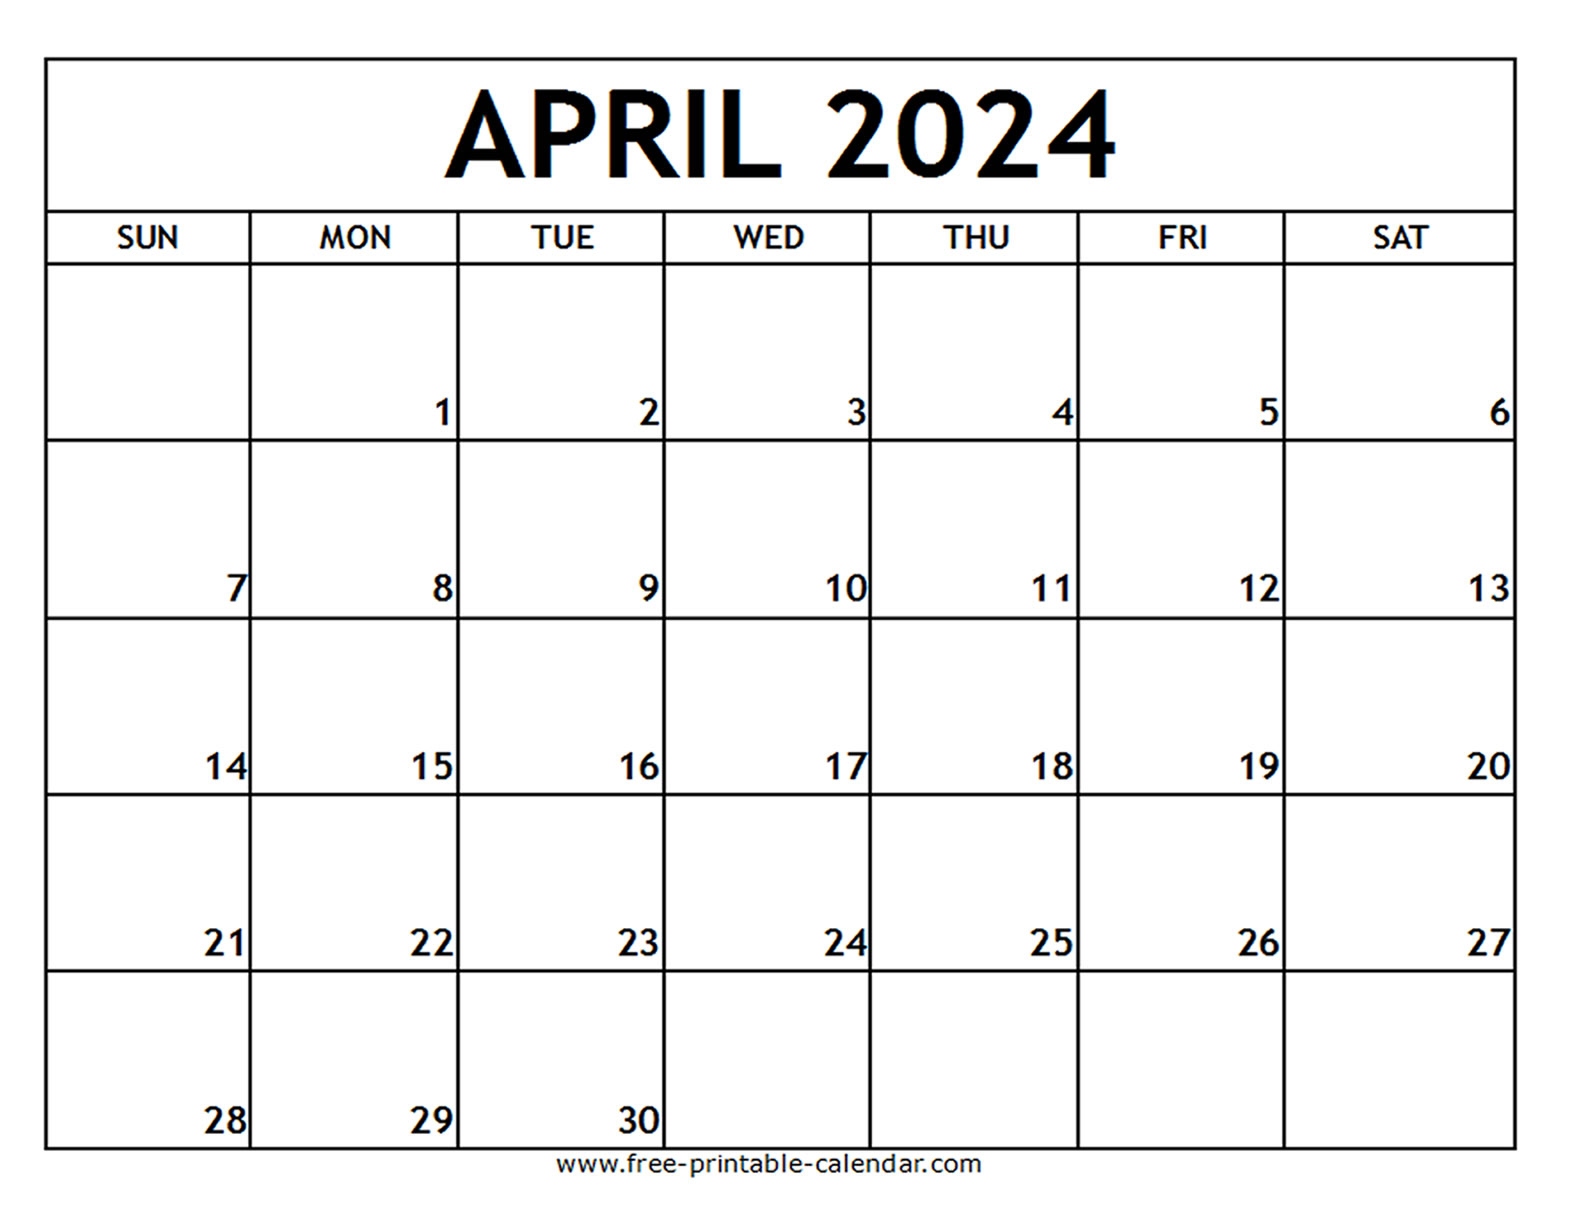 April 2024 Printable Calendar - Free-Printable-Calendar throughout Free Printable April 2024 Calendar Template